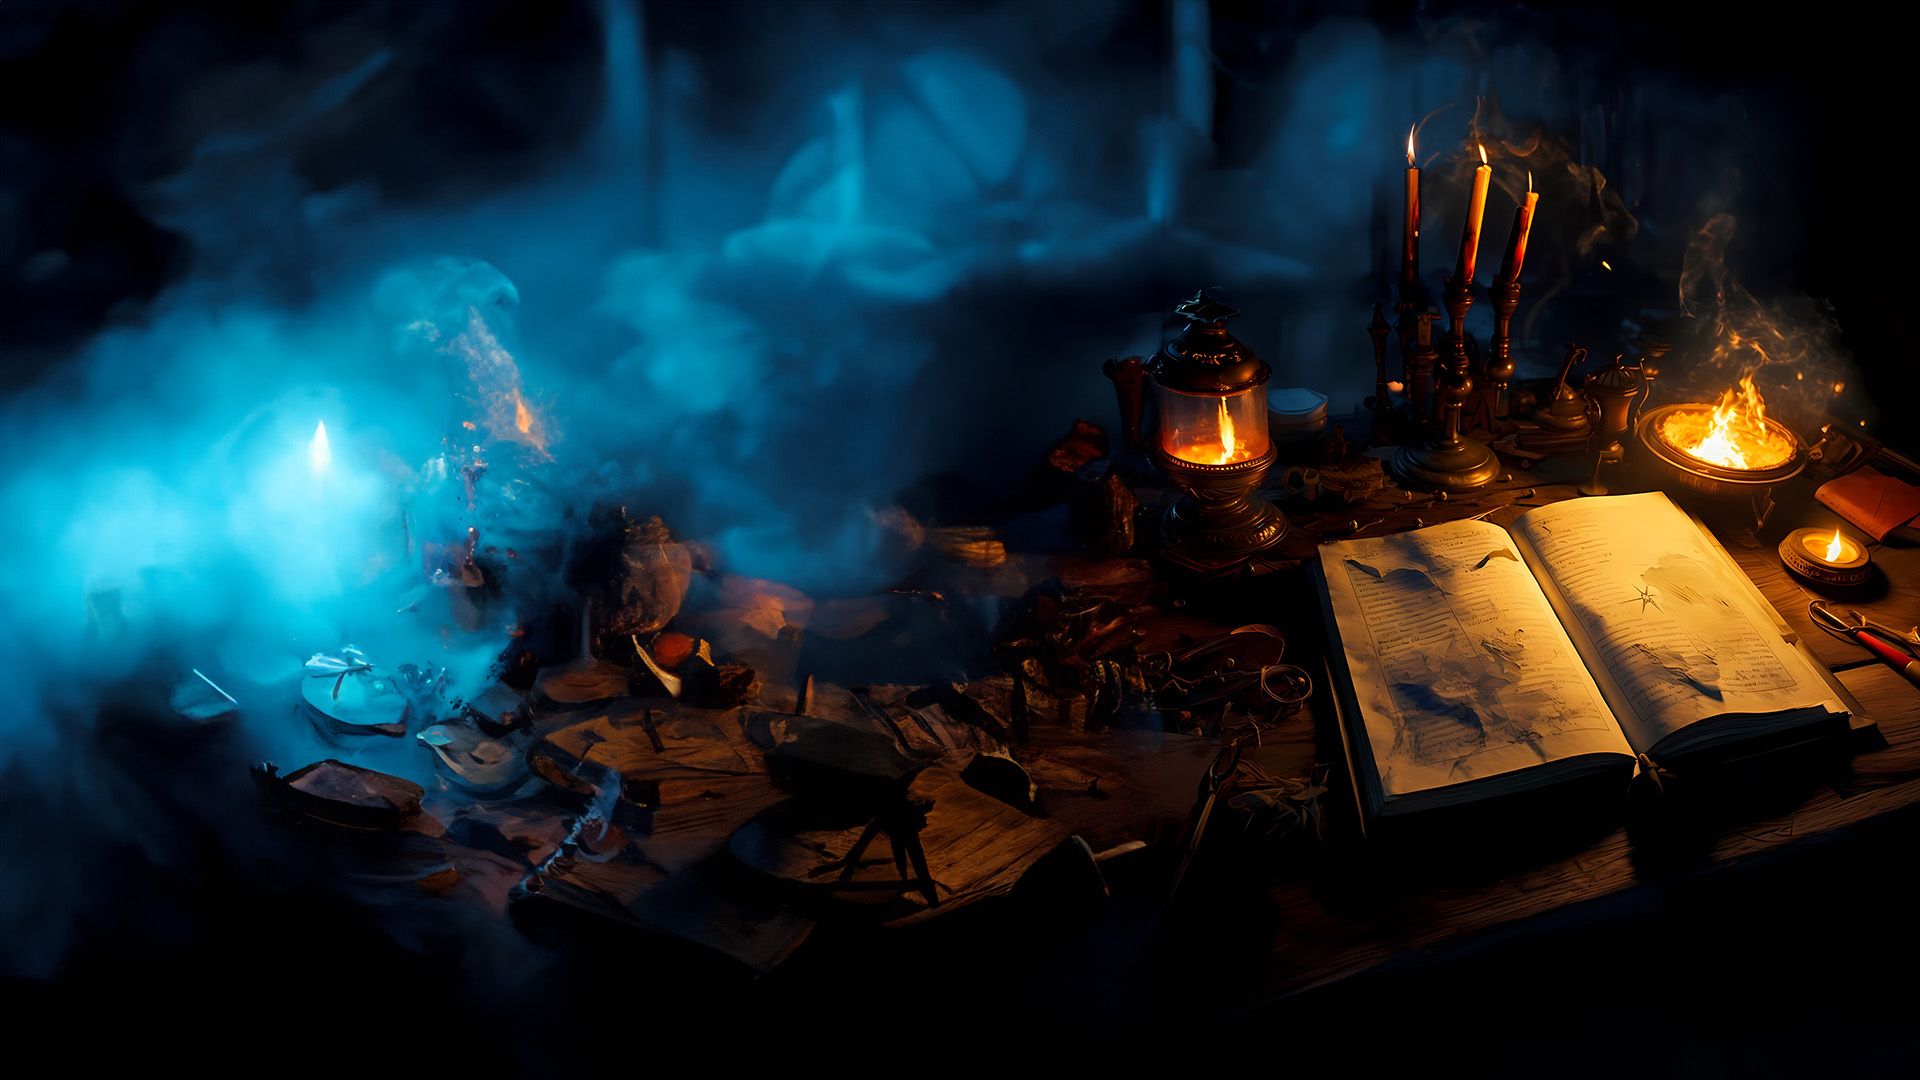 The journal's alchemists